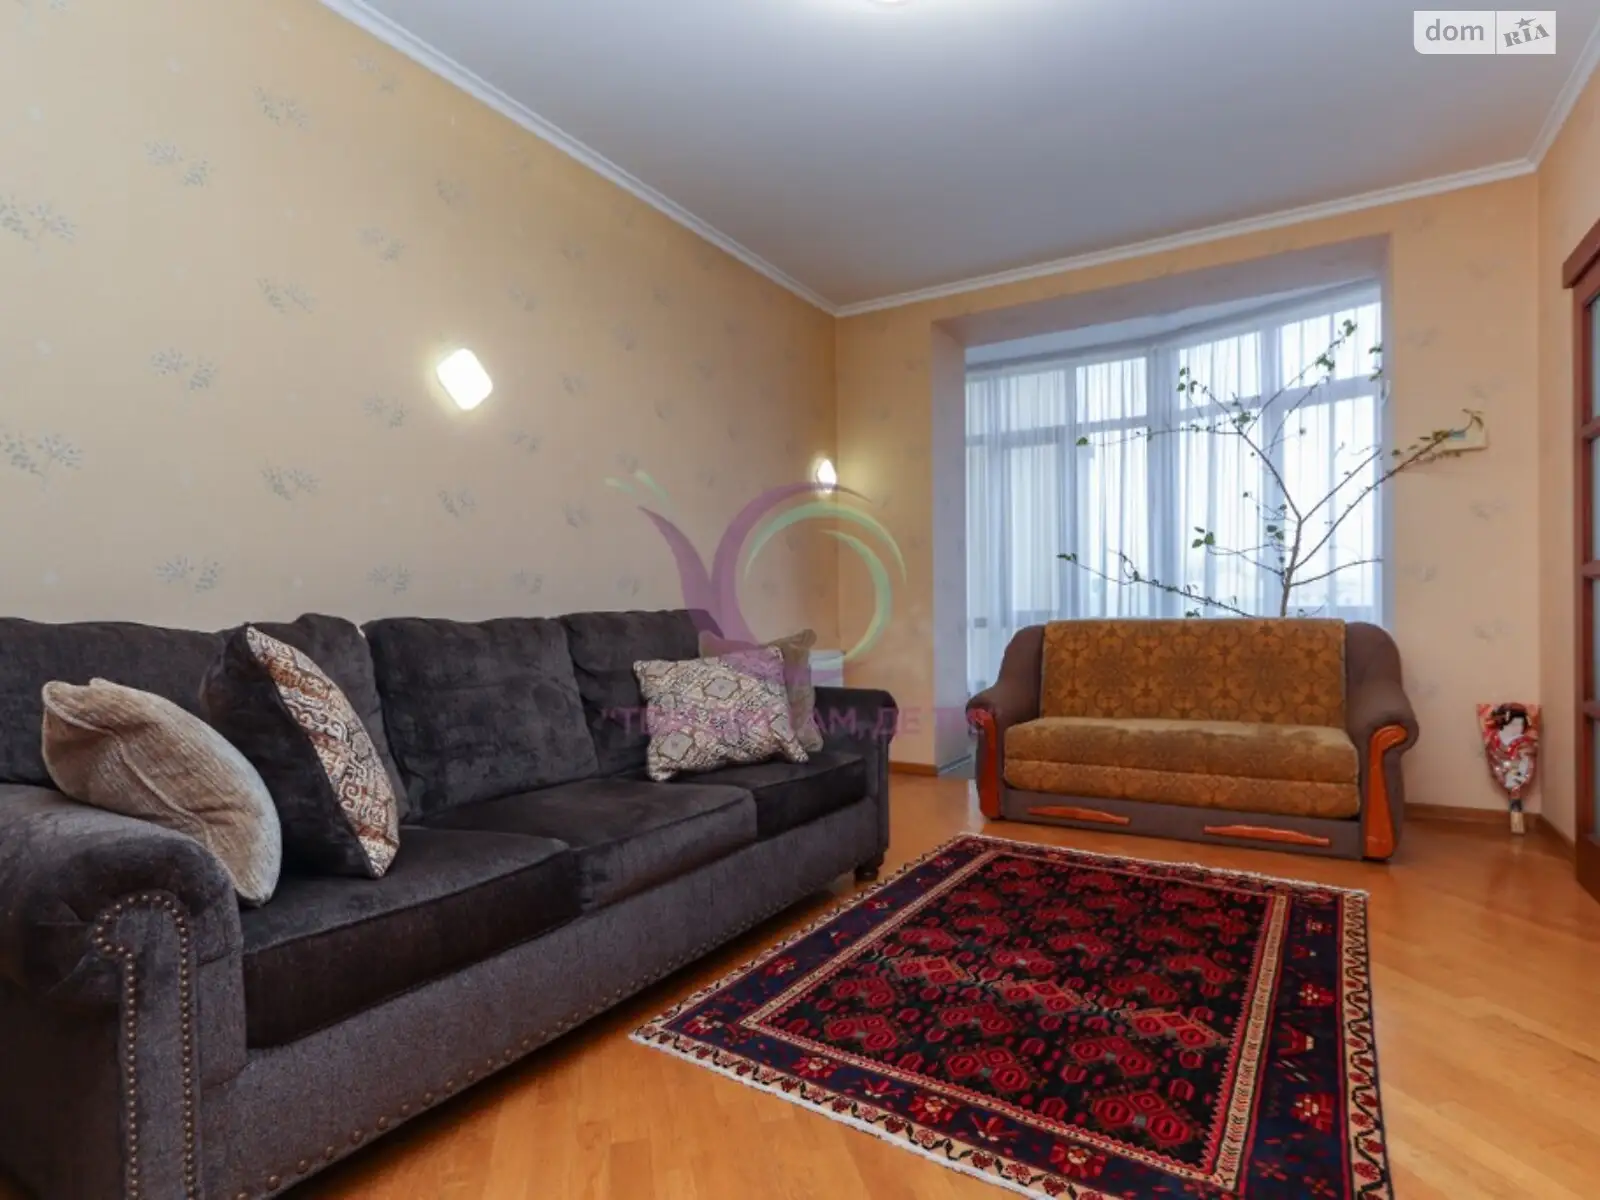 Сдается в аренду 5-комнатная квартира 150 кв. м в Ивано-Франковске, ул. Вячеслава Черновола